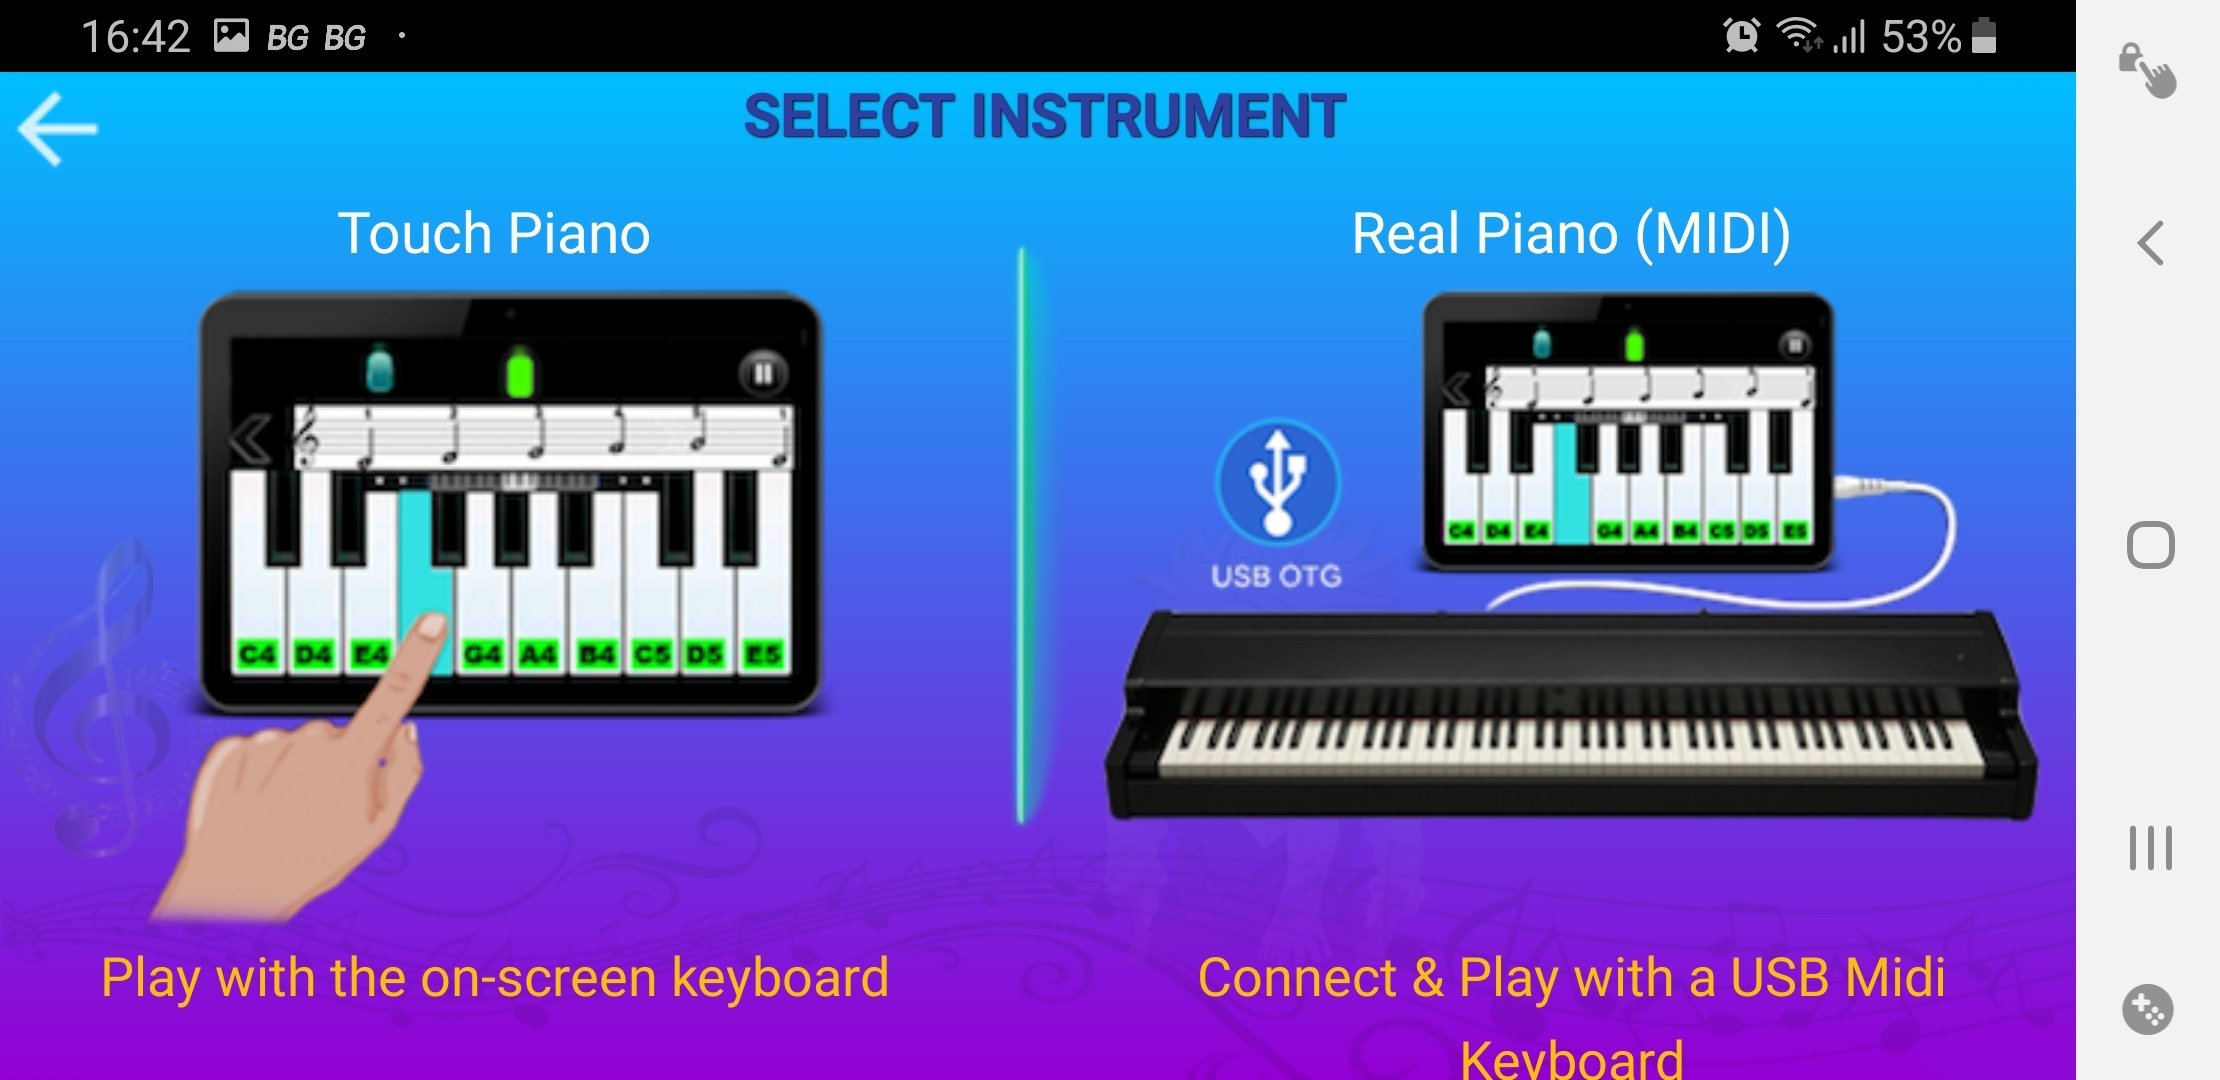 Real Piano Teacher Android Game APK (com.nojoke.realpianoteacher